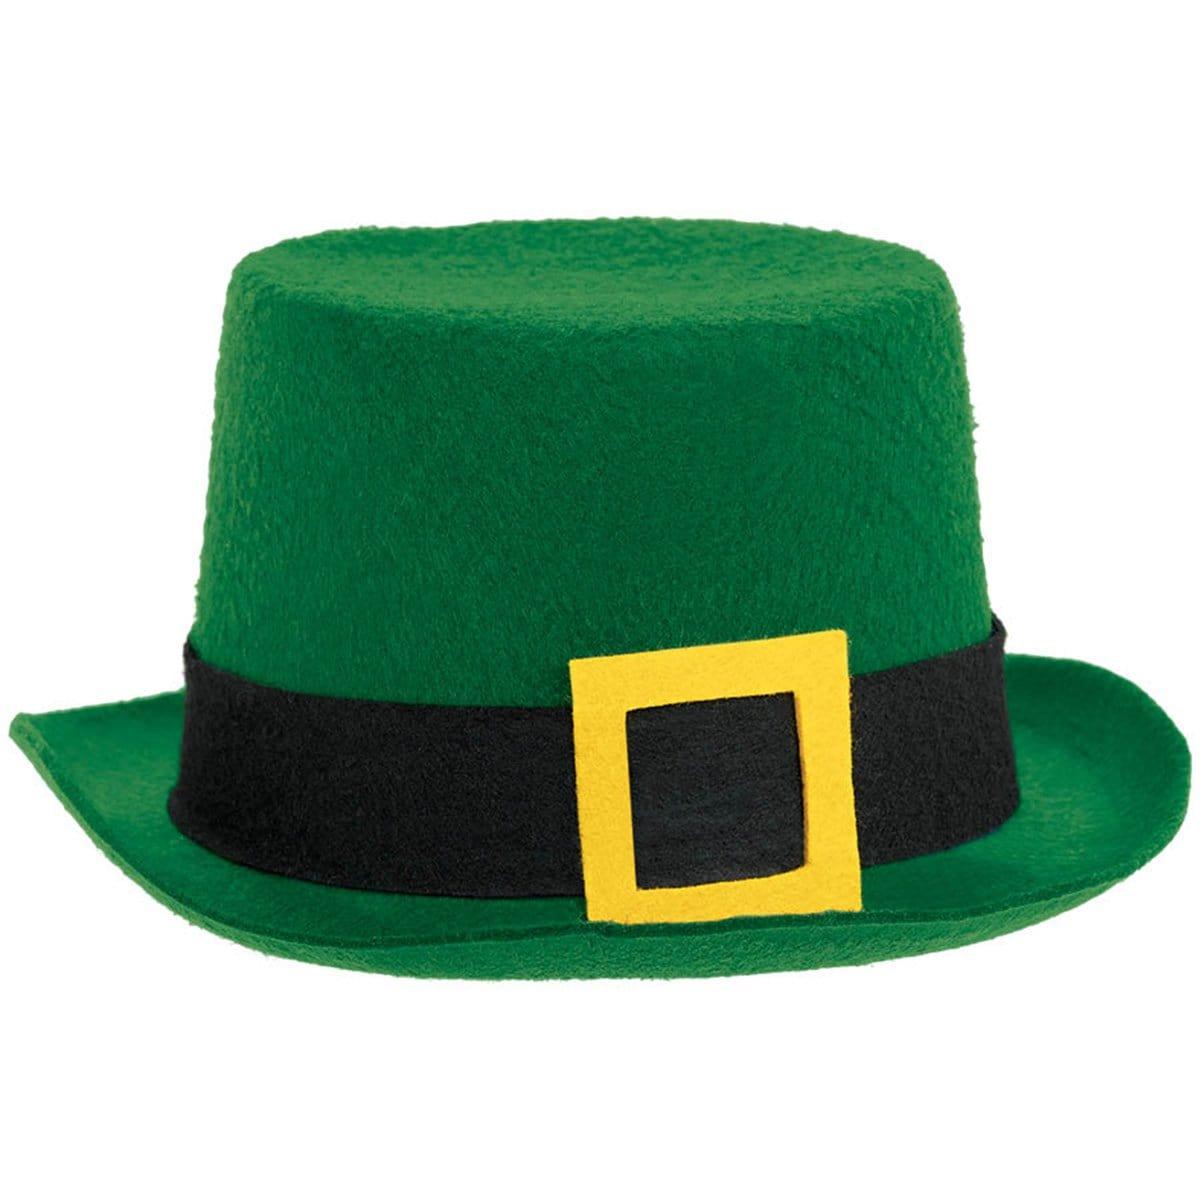 Buy St-Patrick St-Patrick - Felt Top Hat sold at Party Expert